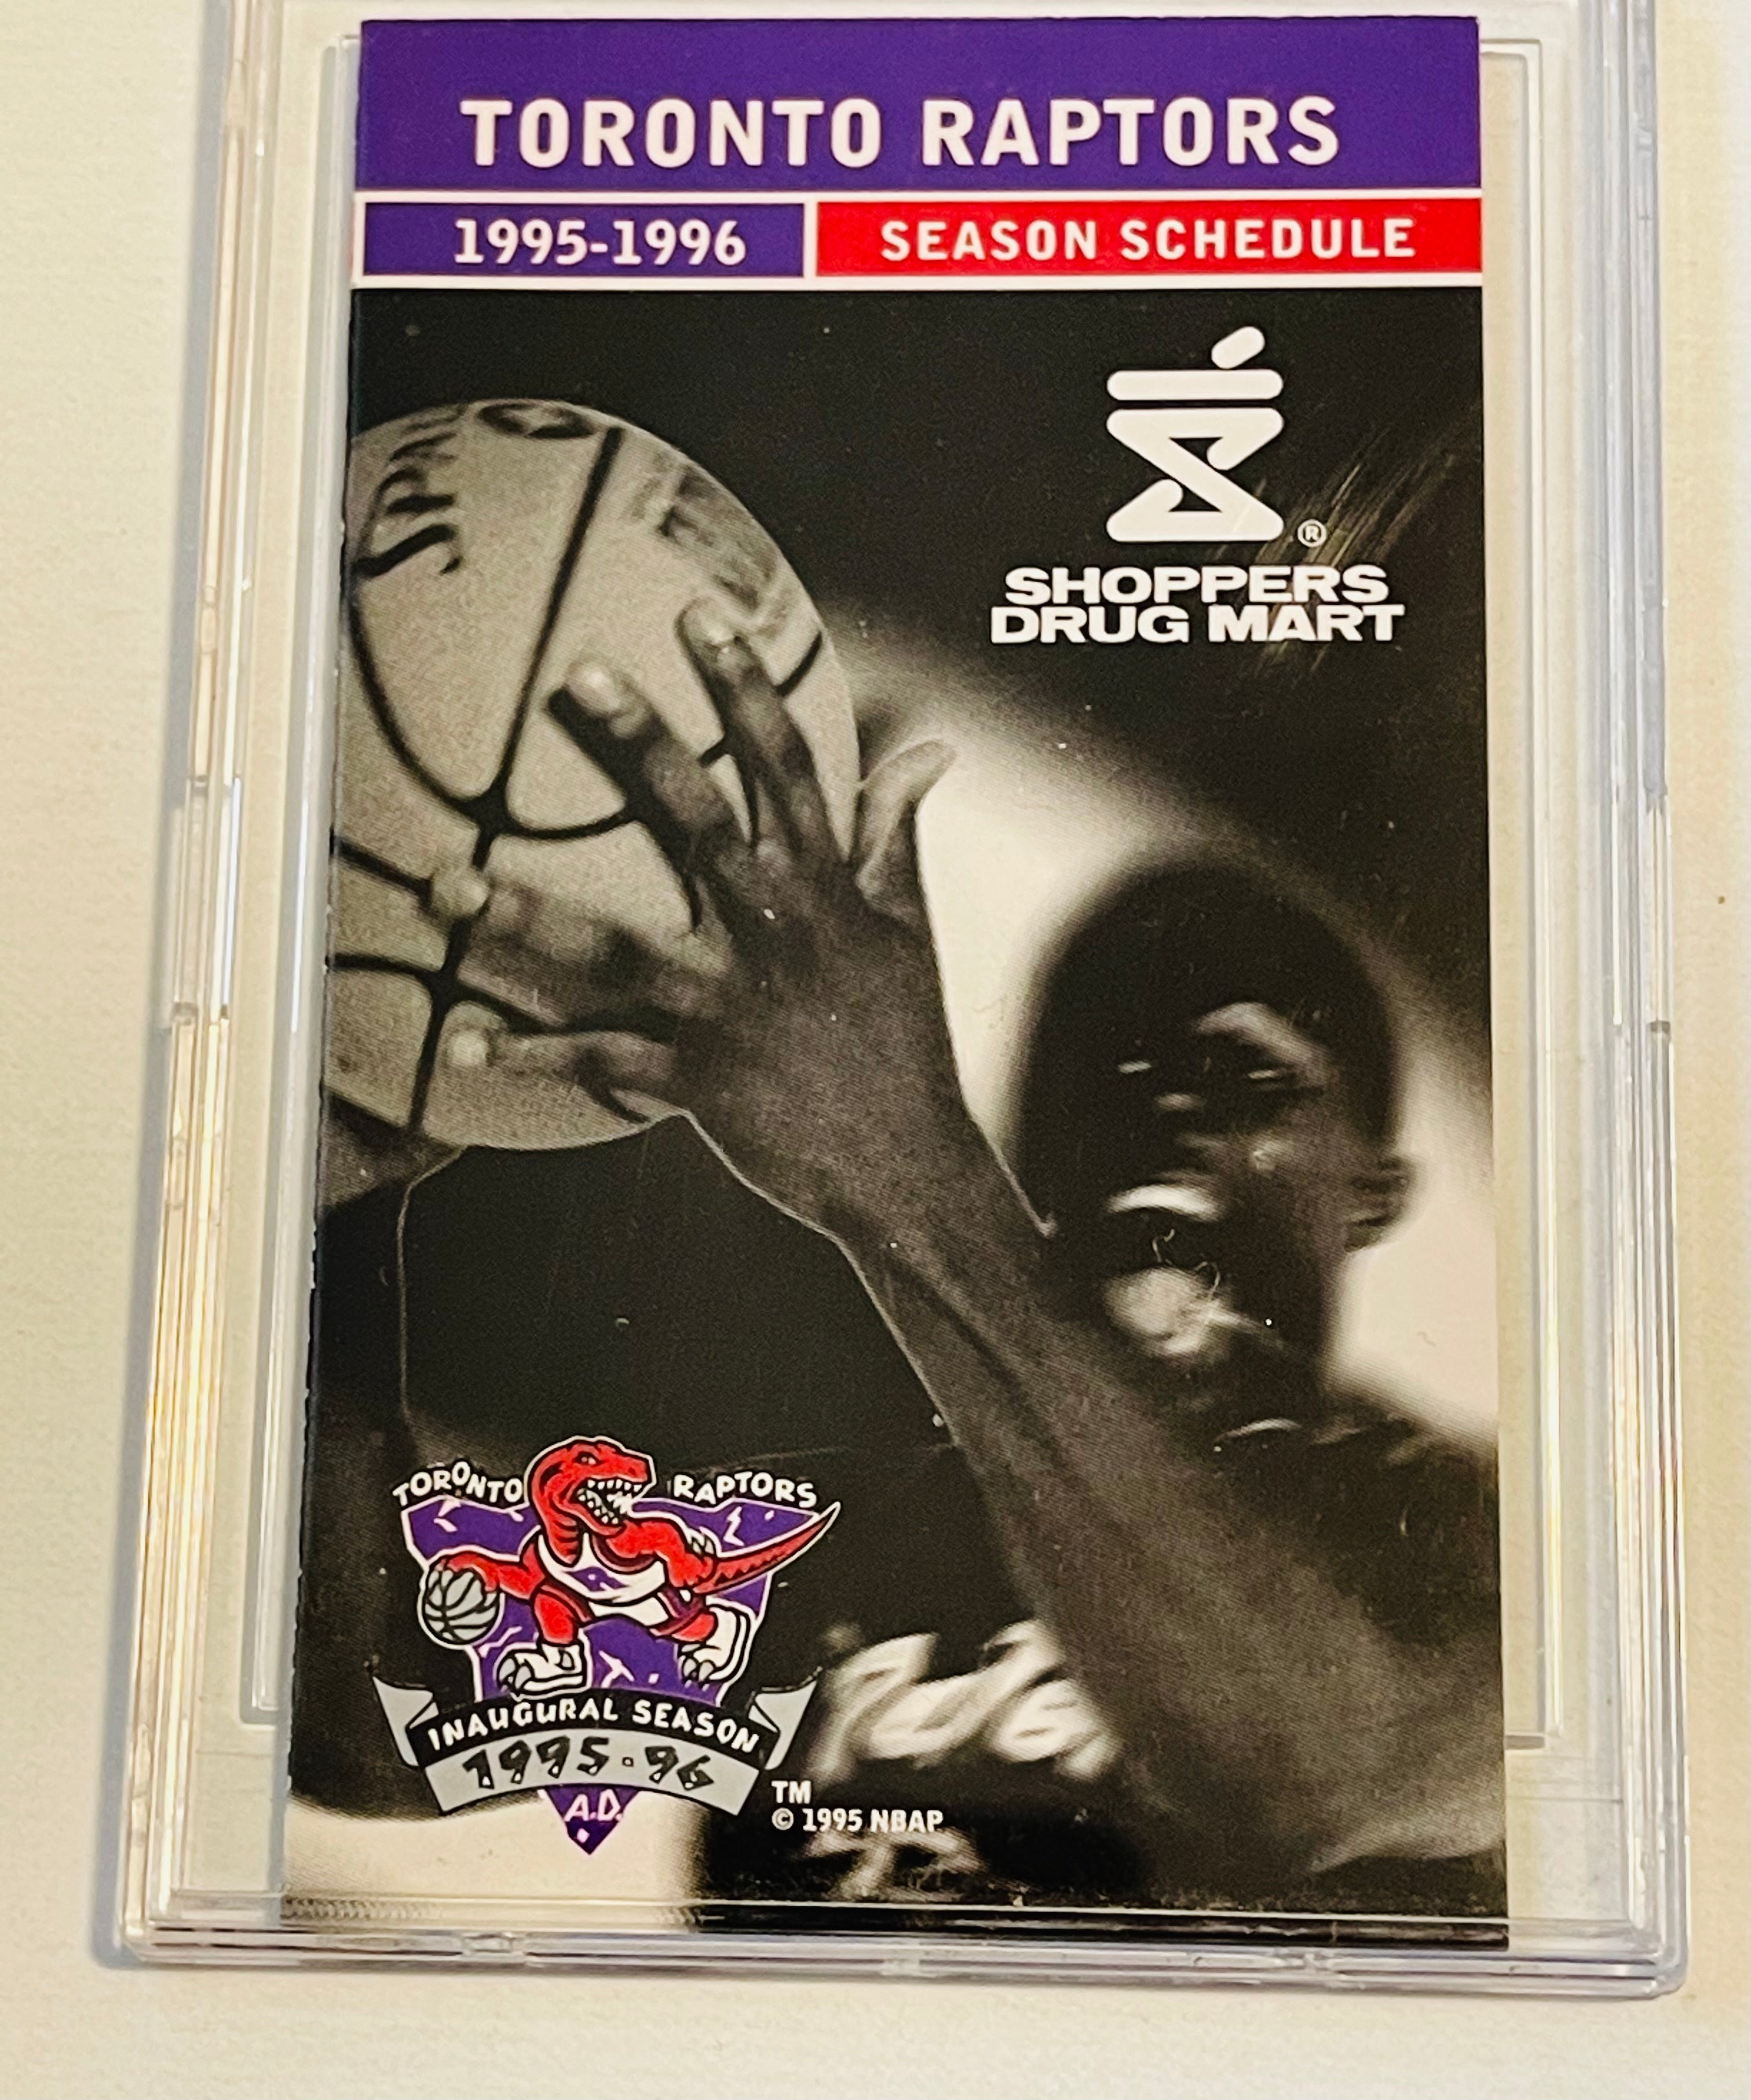 Toronto Raptors basketball first year pocket schedule 1995-96